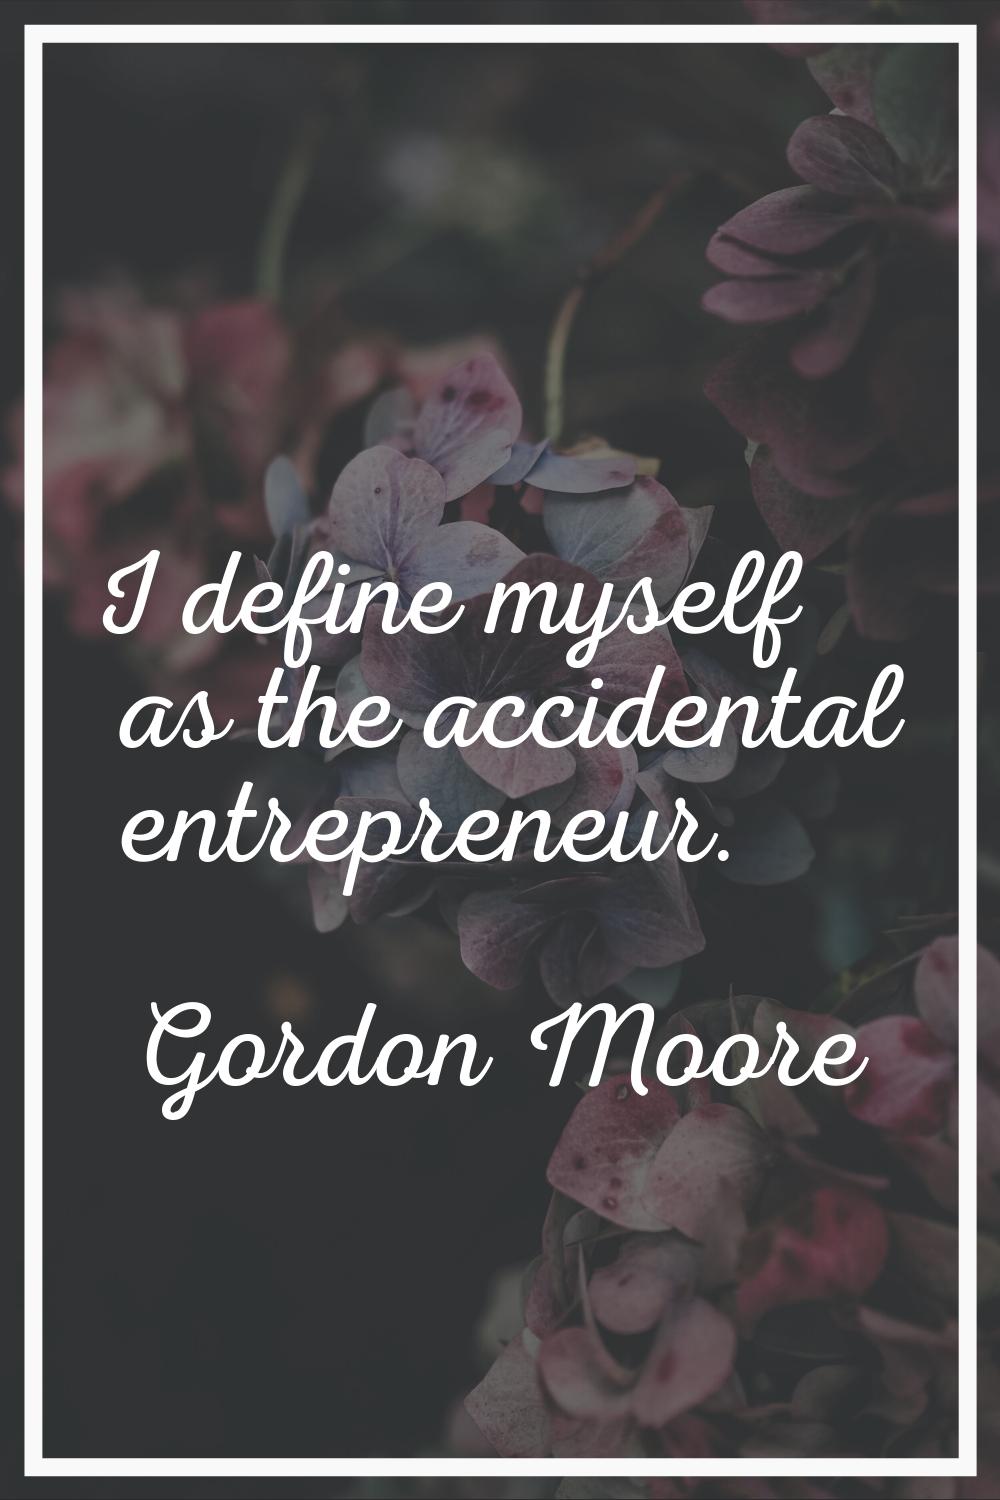 I define myself as the accidental entrepreneur.